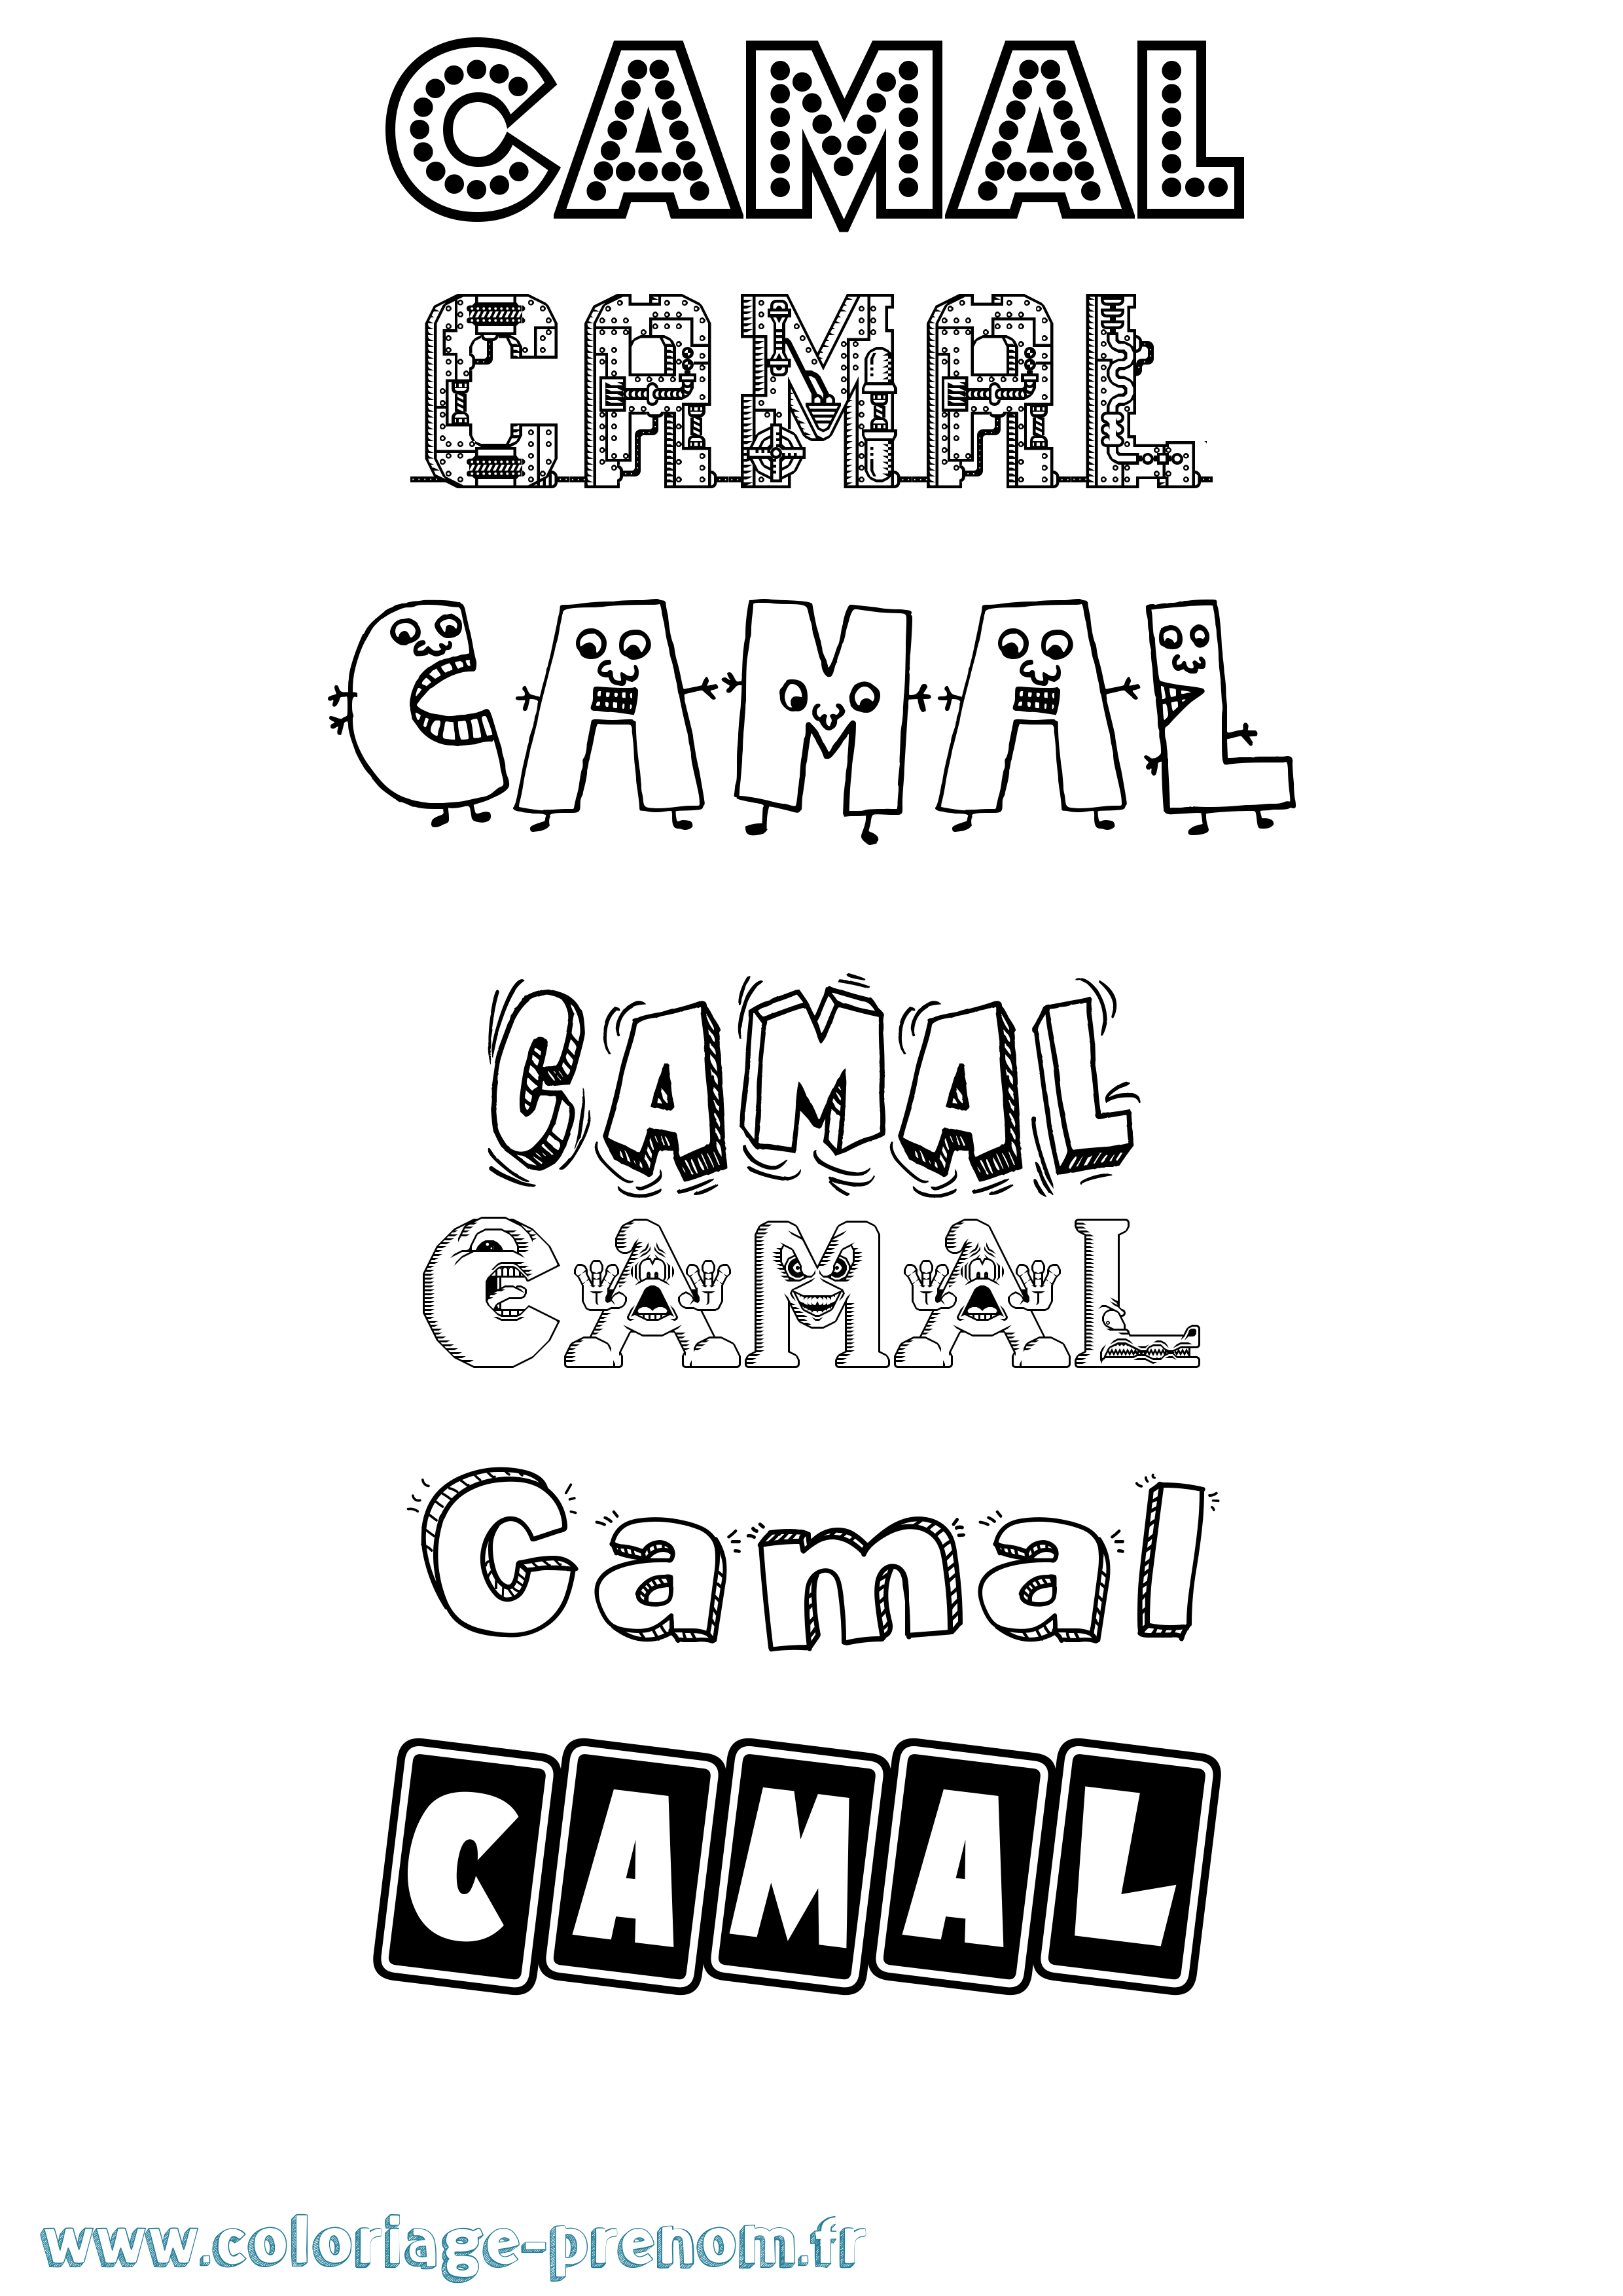 Coloriage prénom Camal Fun